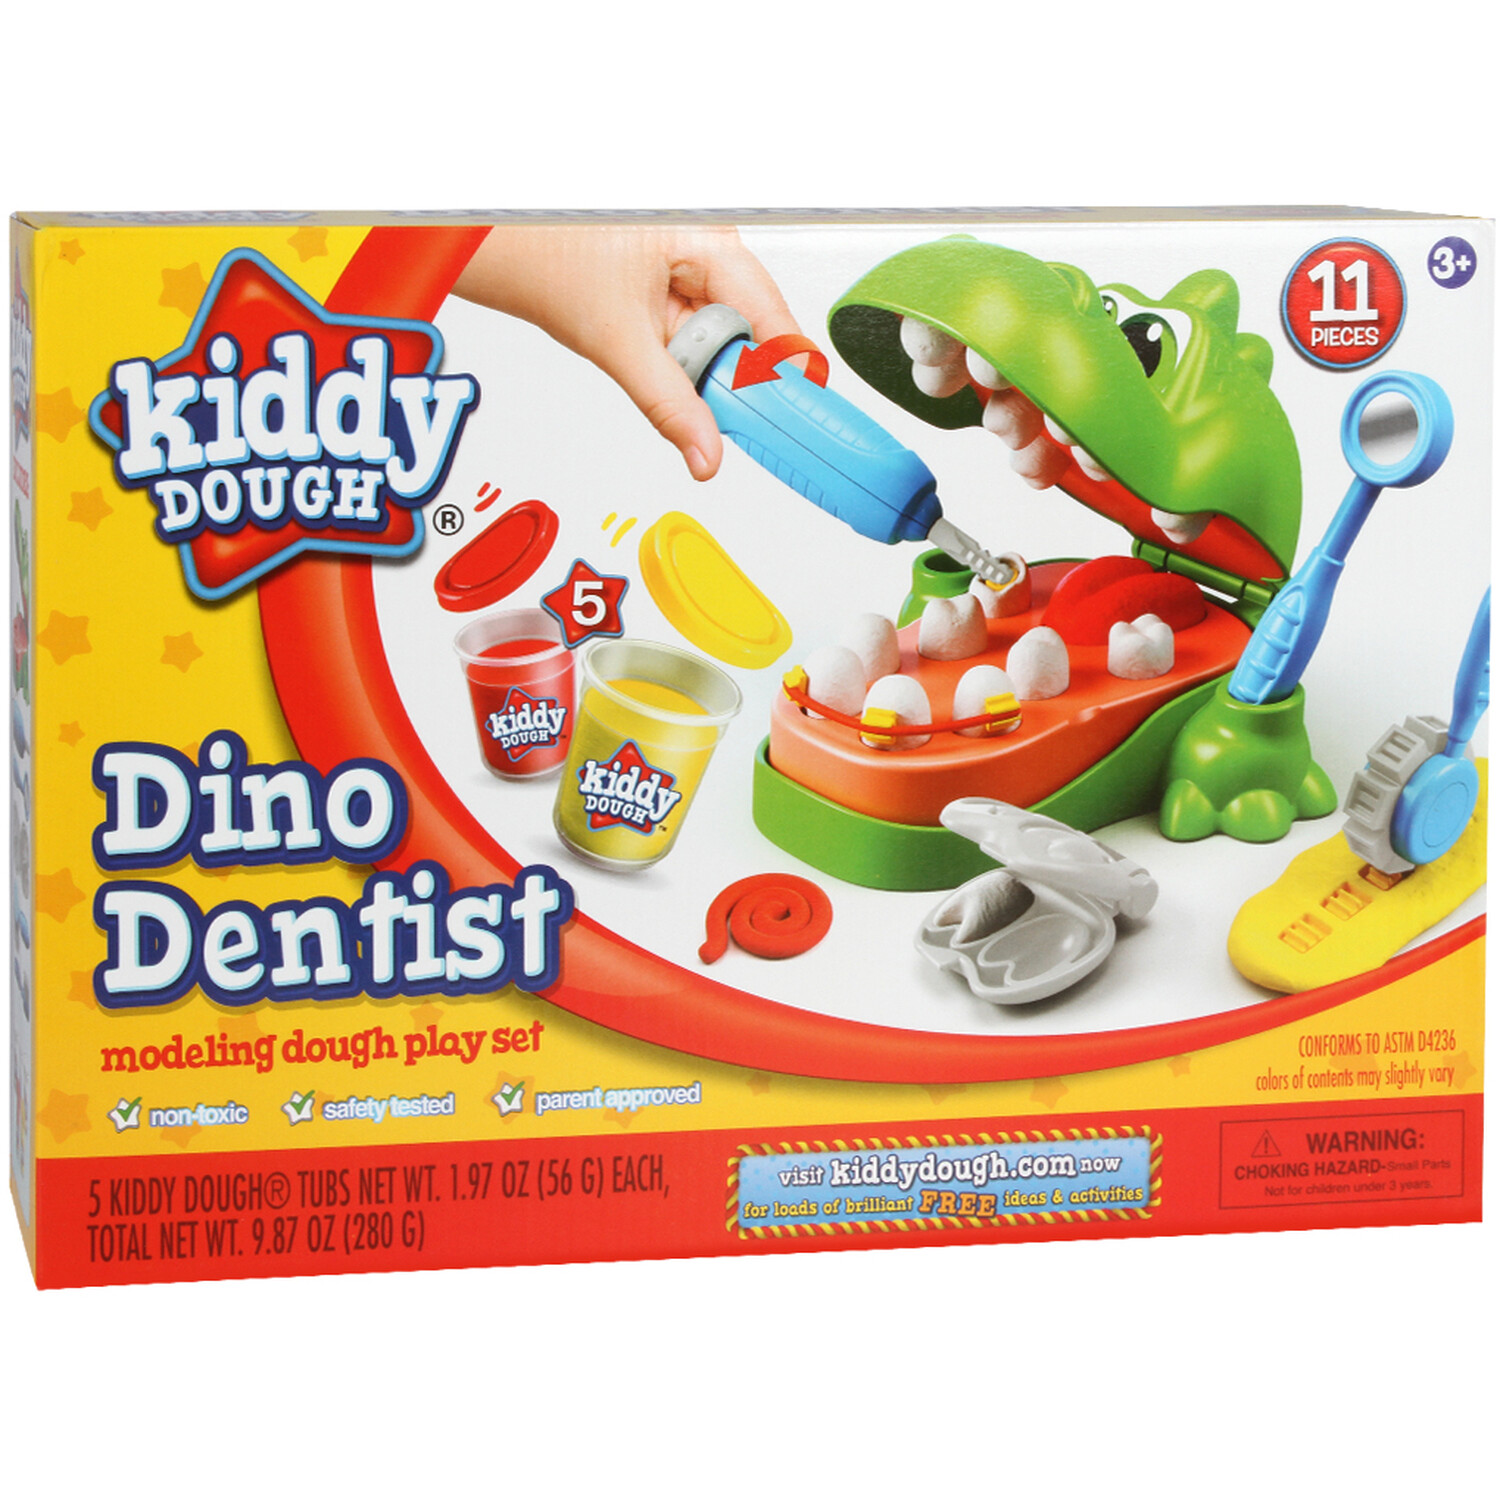 Kiddy Dough Yellow Dino Dentist Modelling Dough Play Set Image